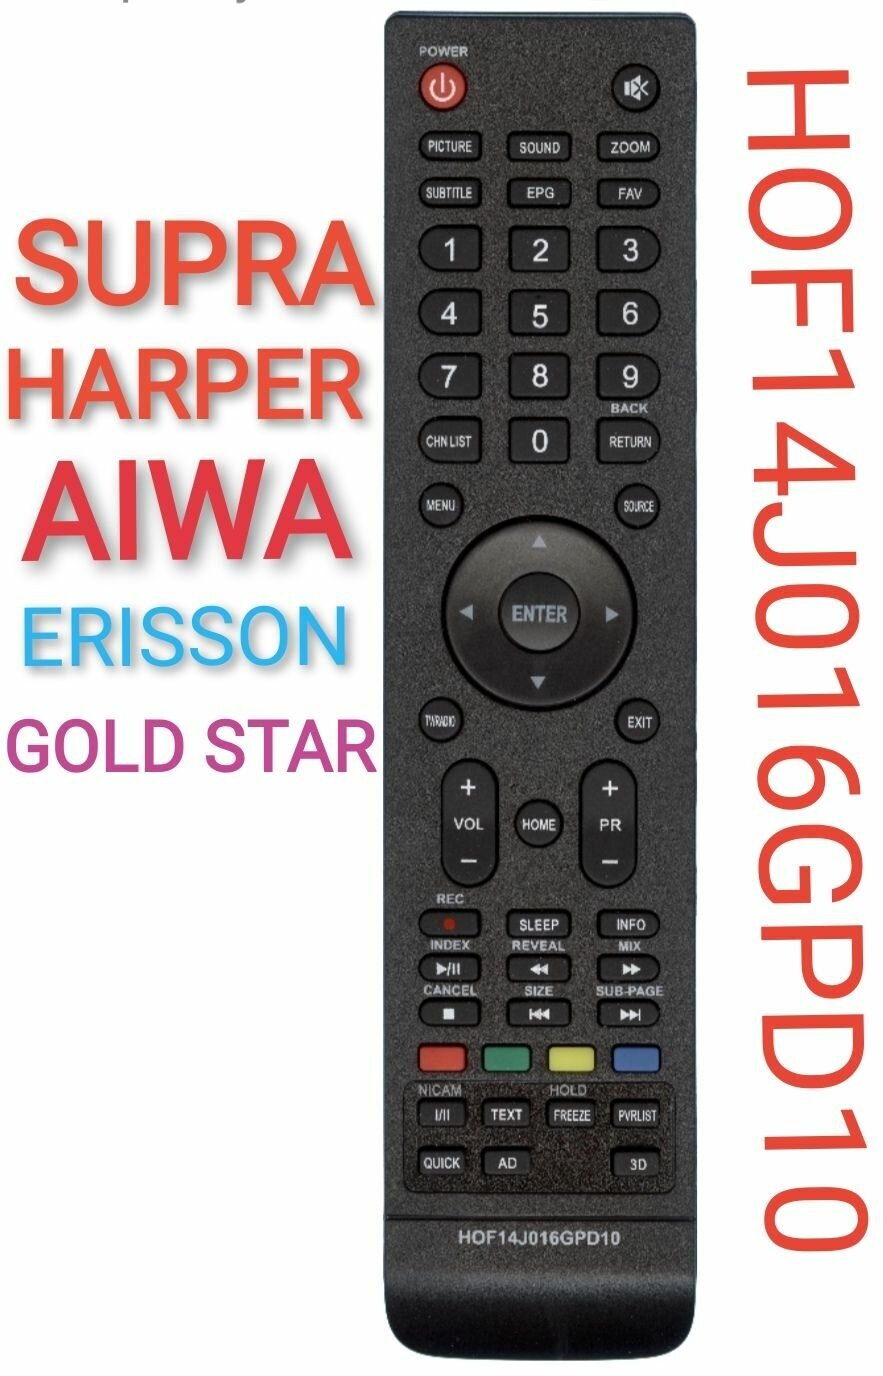 Пульт для Supra erisson AIWA harper HOF14J016GPD10